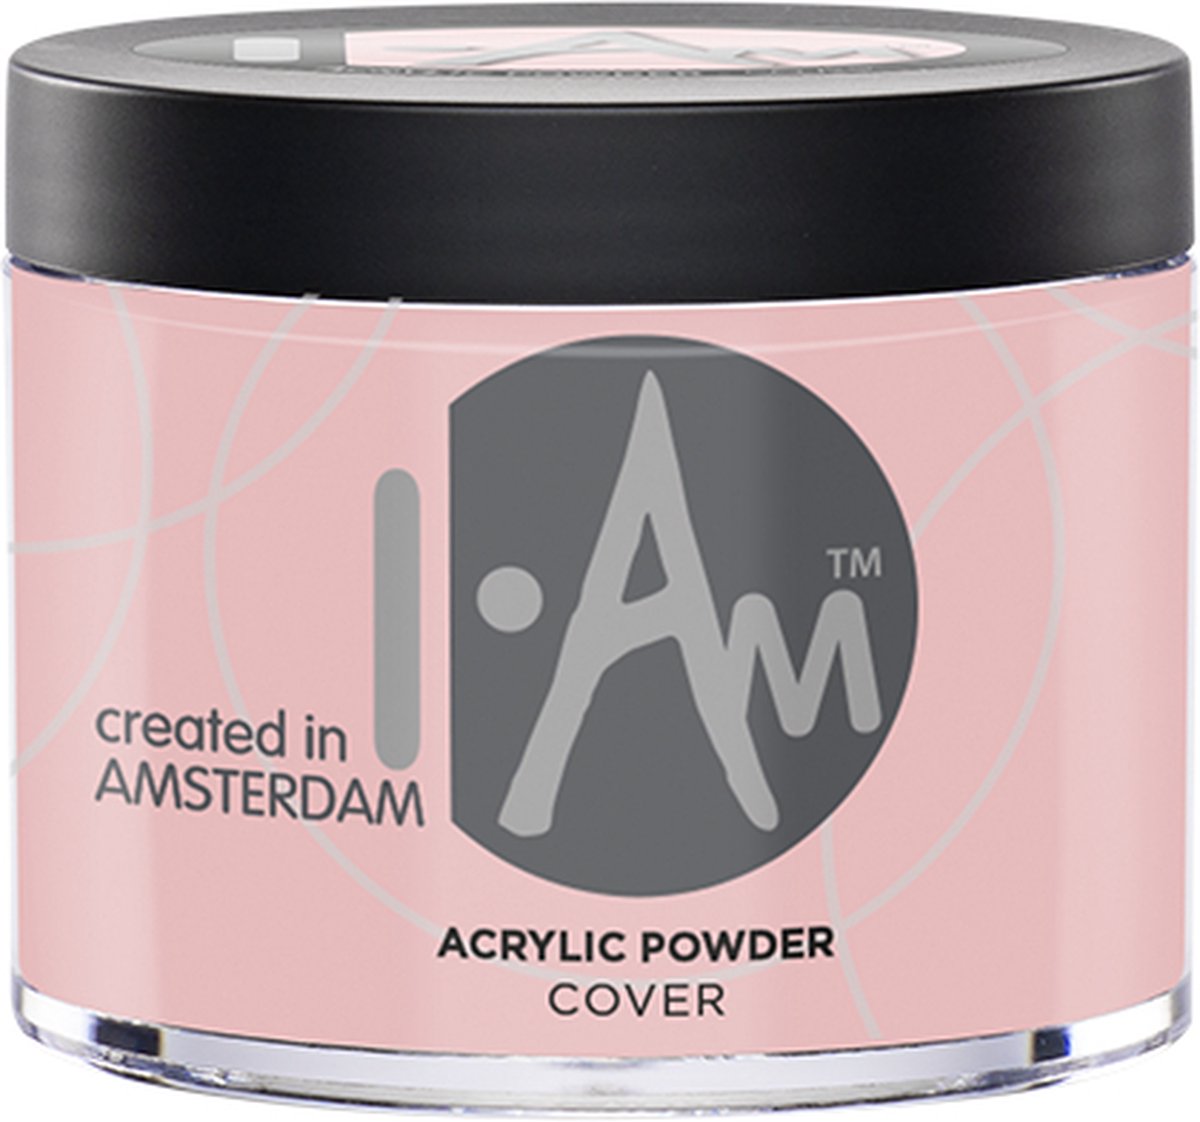 I.Am Nail Systems I.Am Acrylic Powder Cover (100gr)